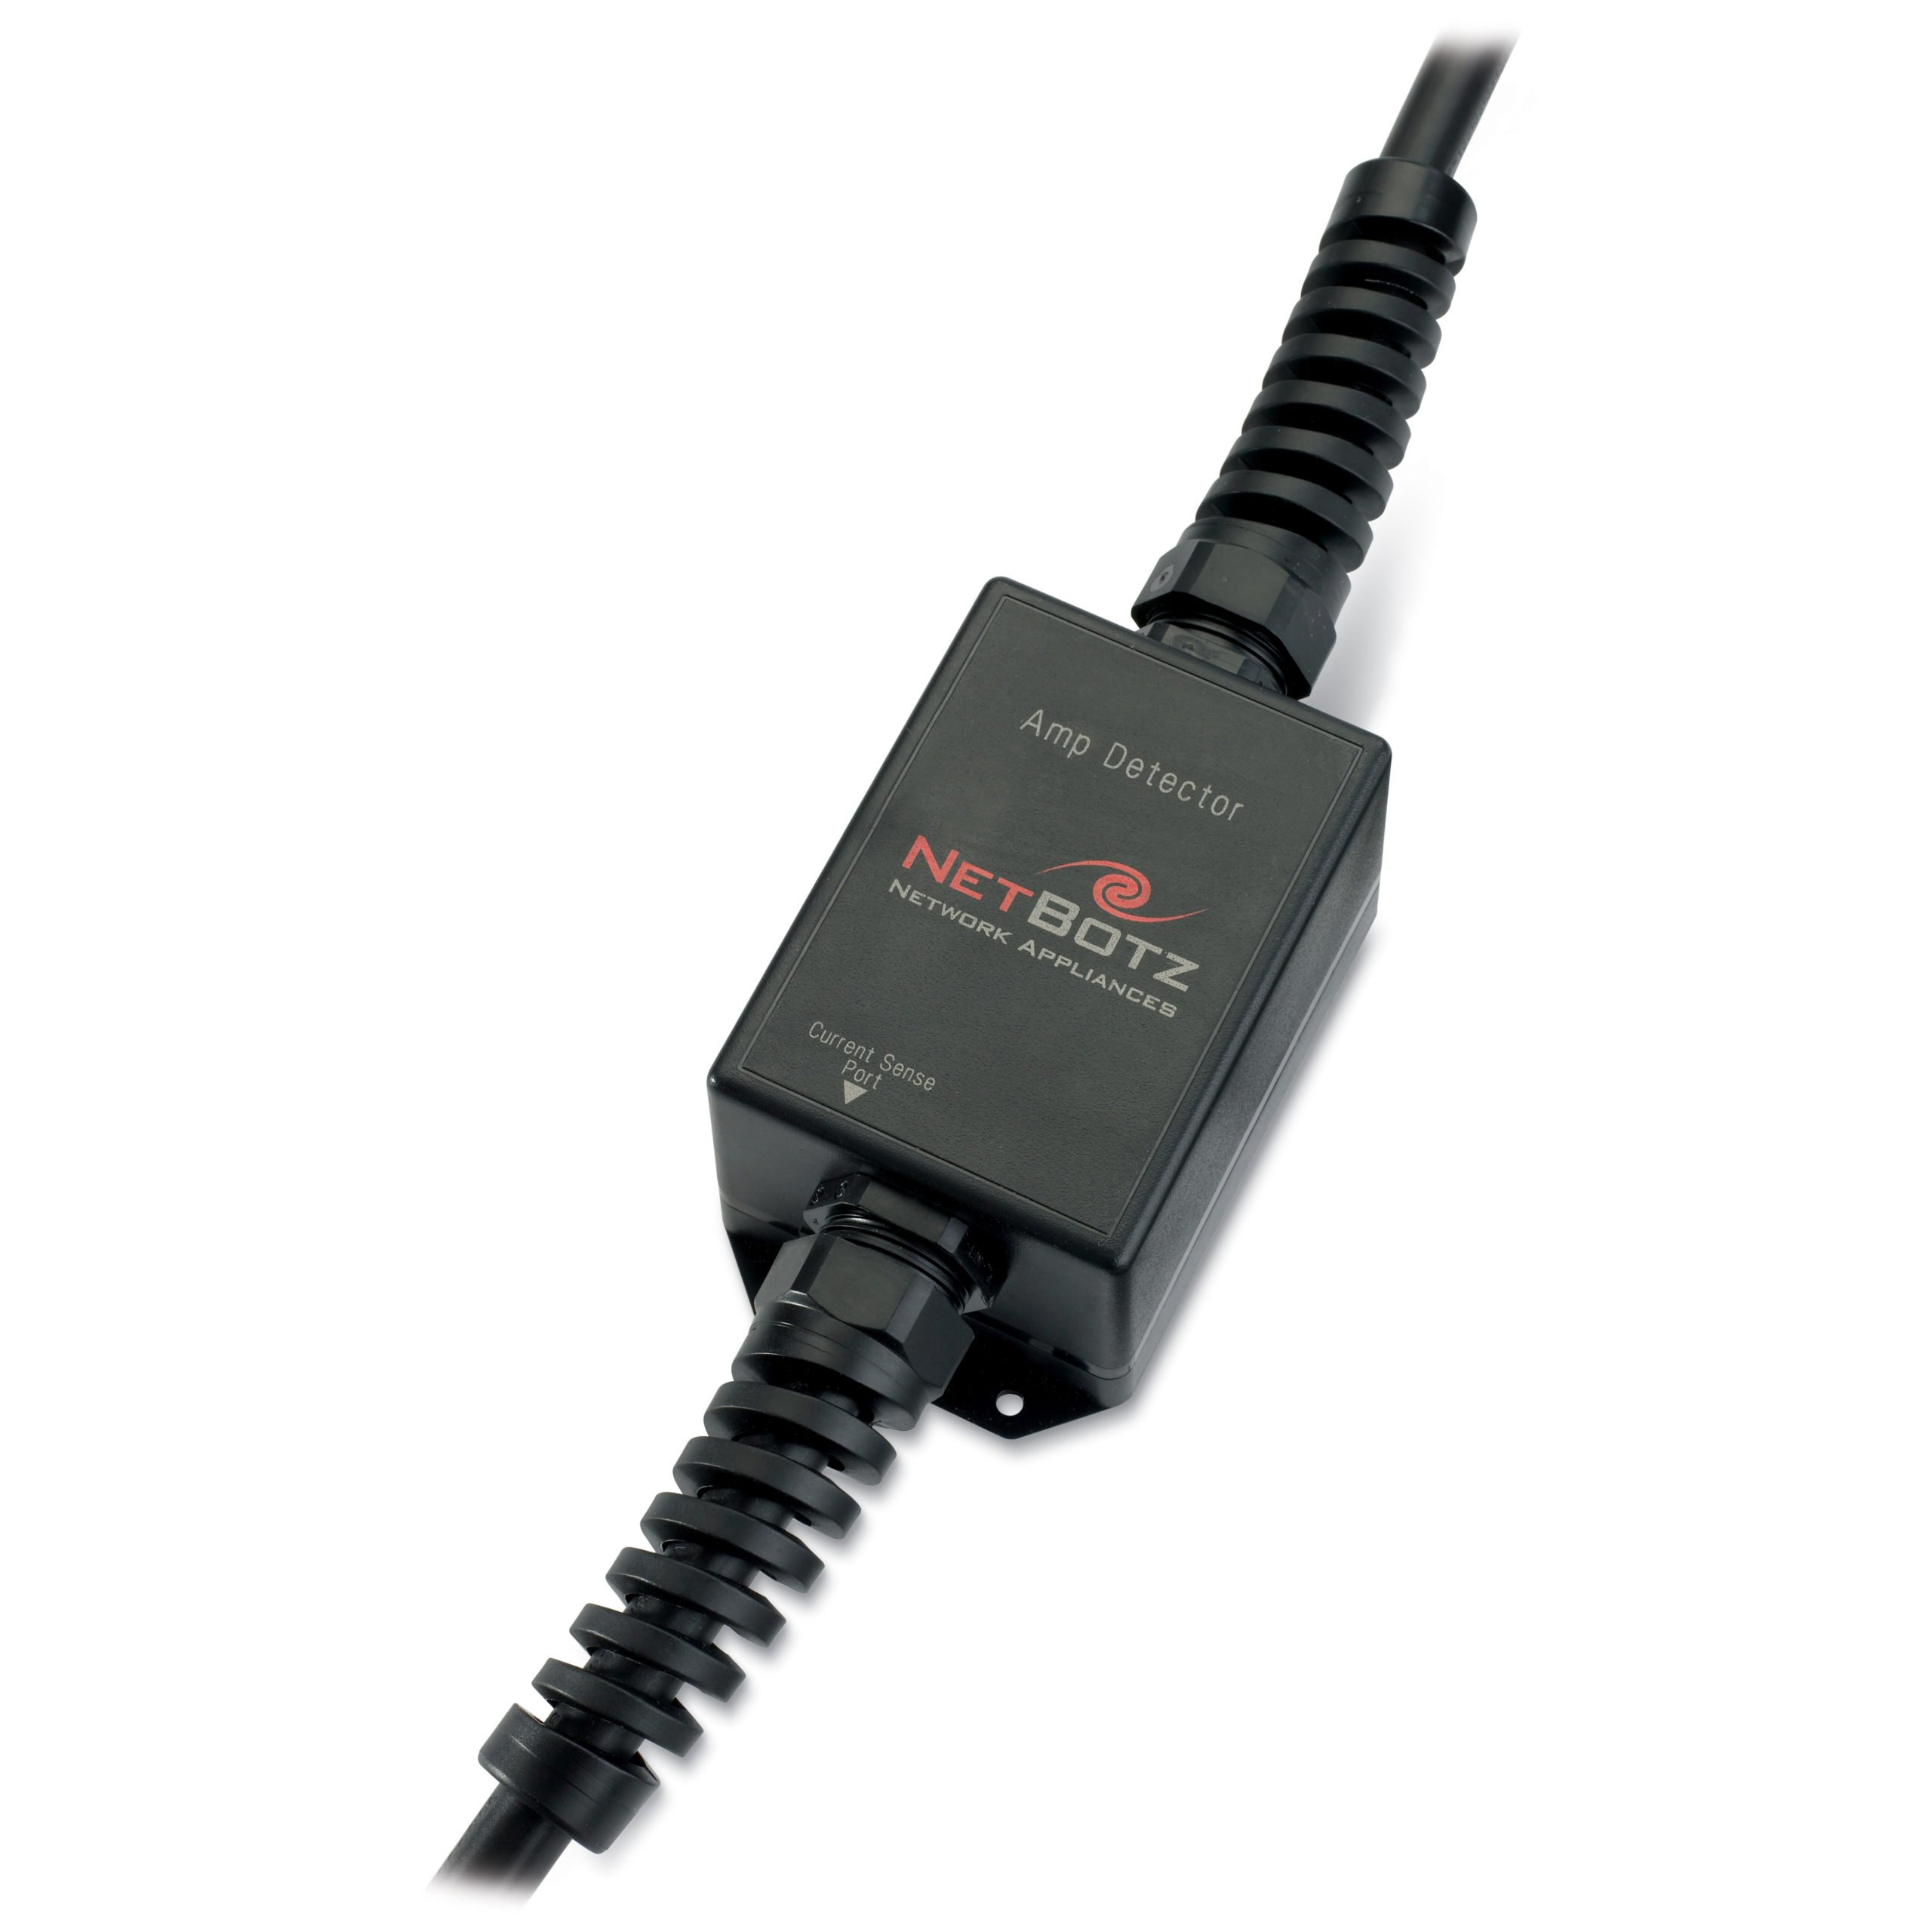 APC by Schneider Electric Amp Detector NBDA30L2